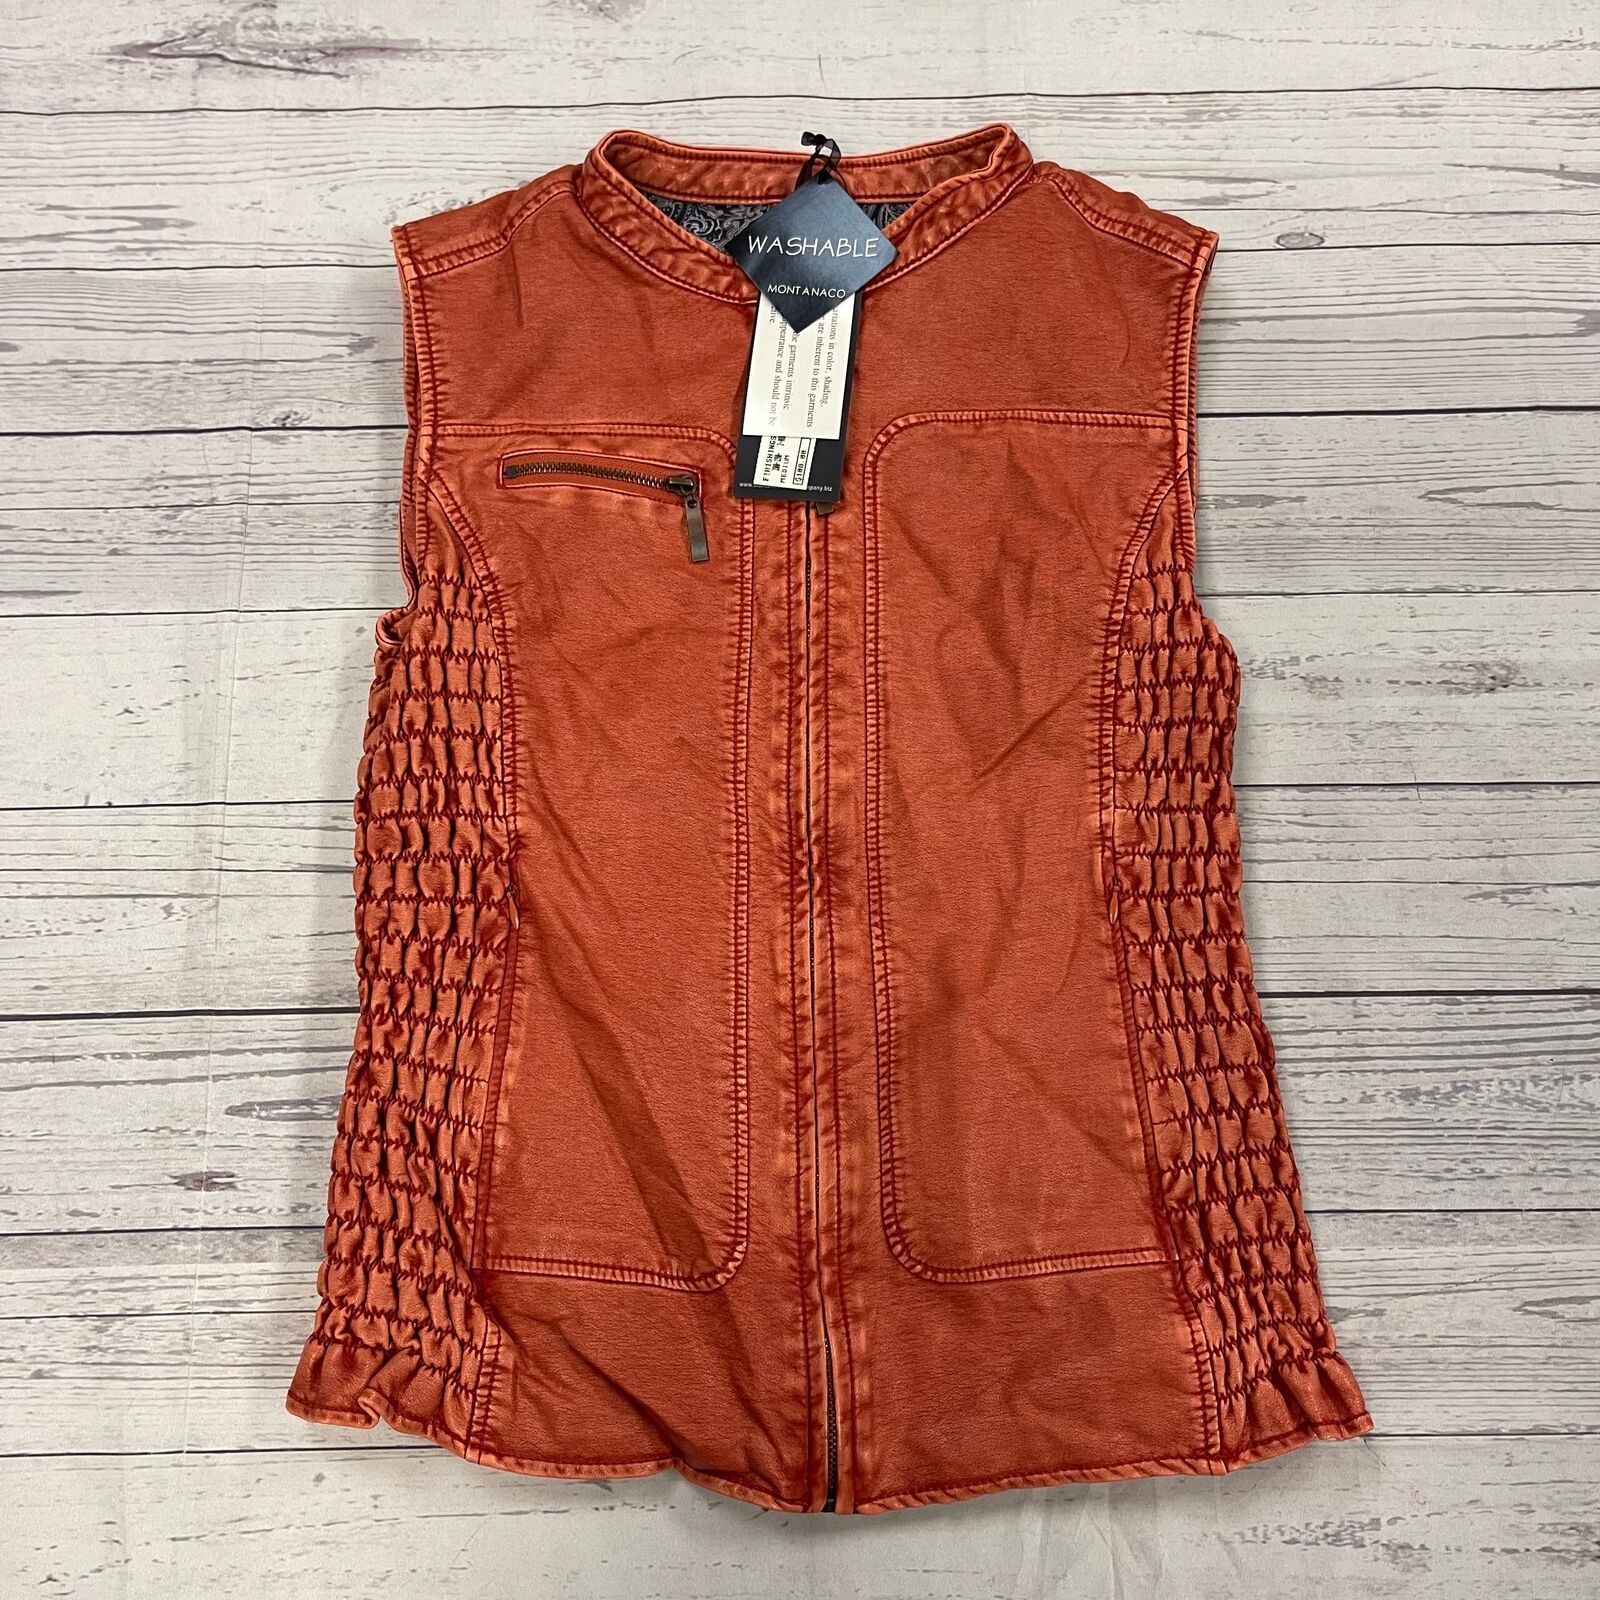 Montanaco Faux Leather Burnt Orange Quilted Side Vest Women’s Size Medium New